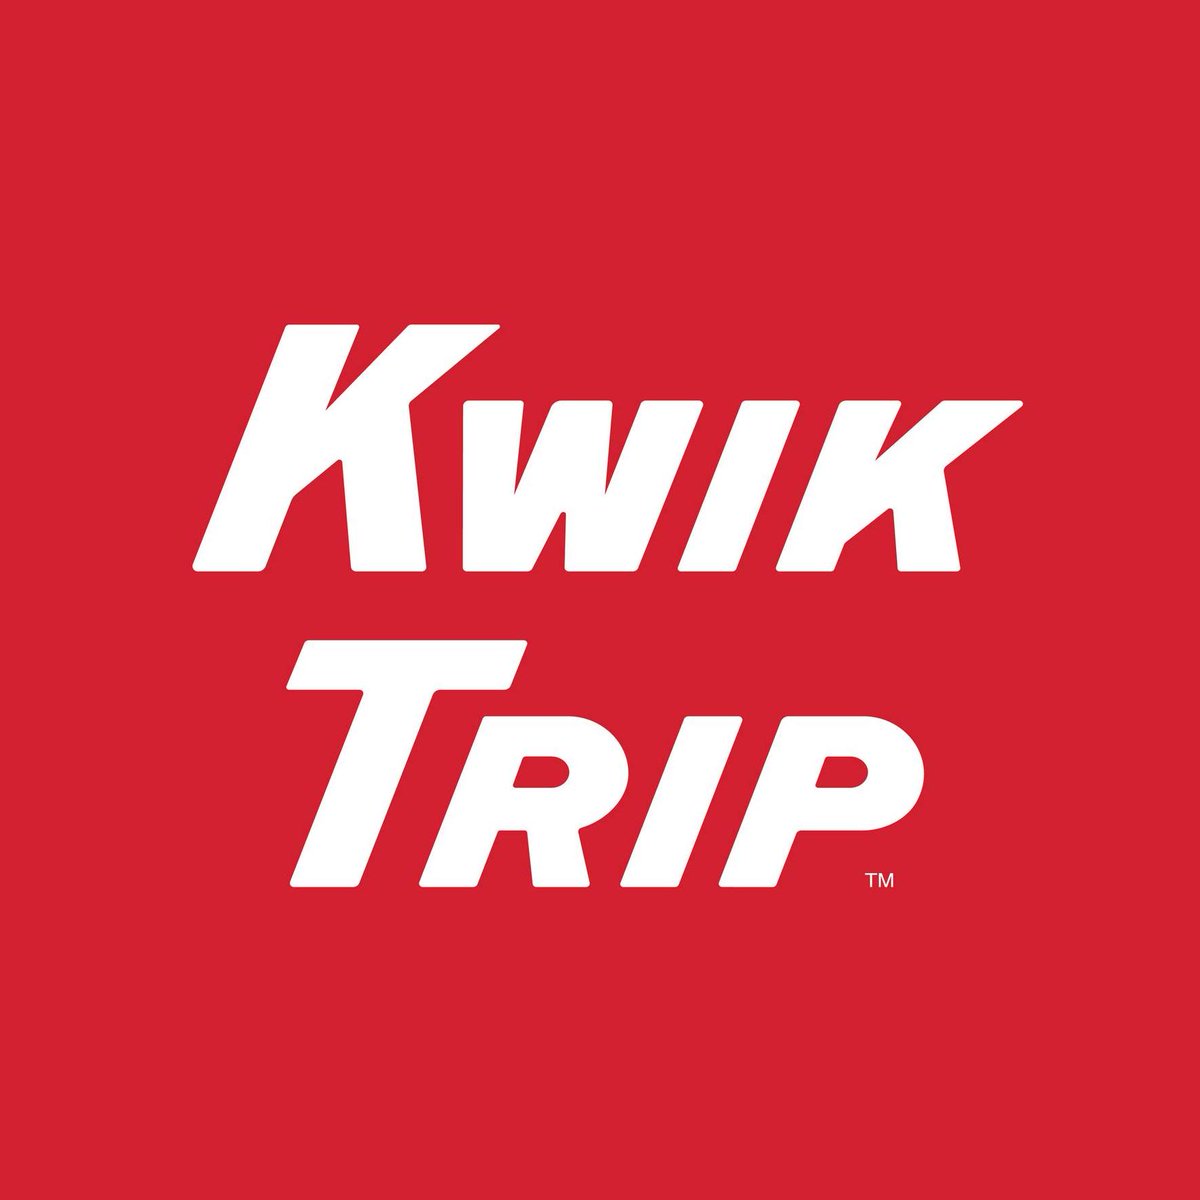 It looks like Kwik Trip won Wisconsin Kwik EV cash, because they were Kwik awesome. @KwikTrip

bizjournals.com/milwaukee/news…